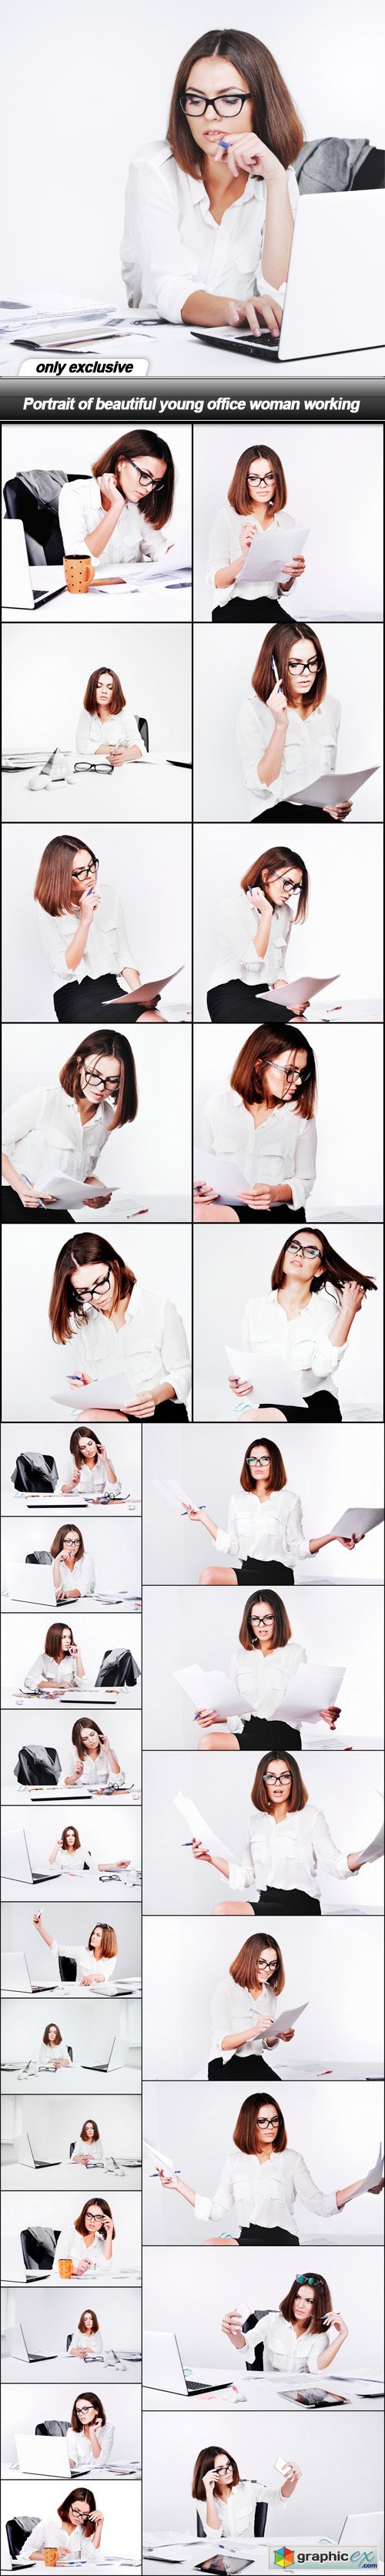 Portrait of beautiful young office woman working - 30 UHQ JPEG